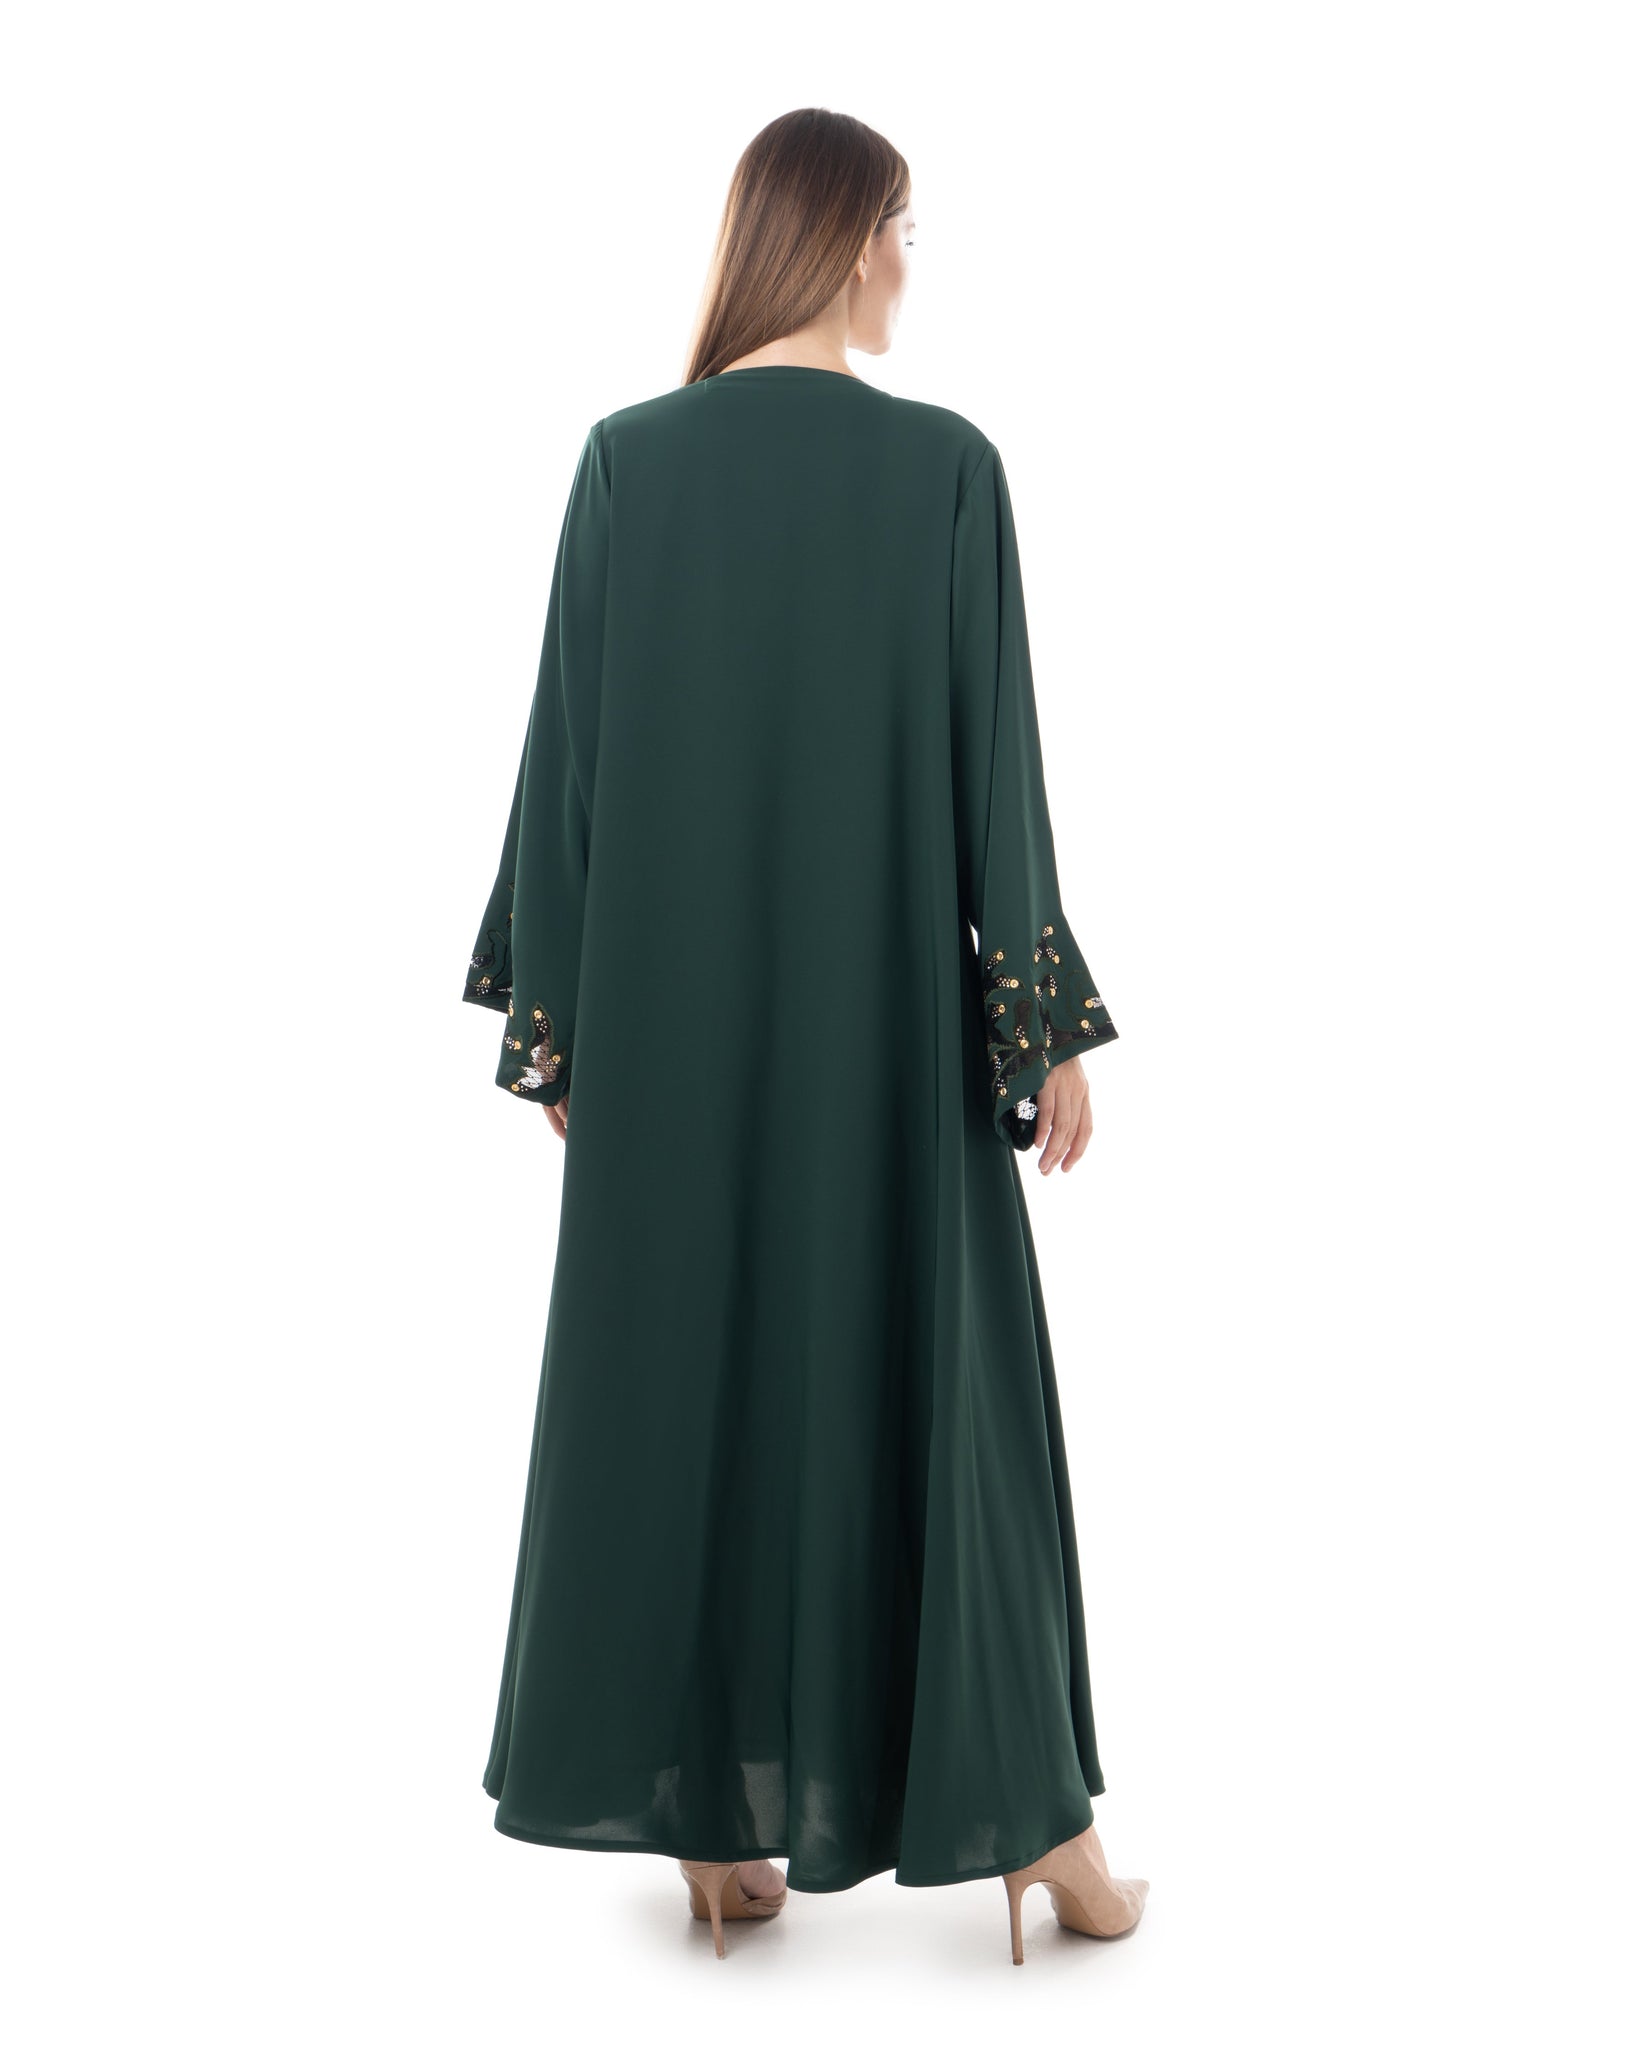 Hanayen Green Embroidered Abaya Embellished With Crystals